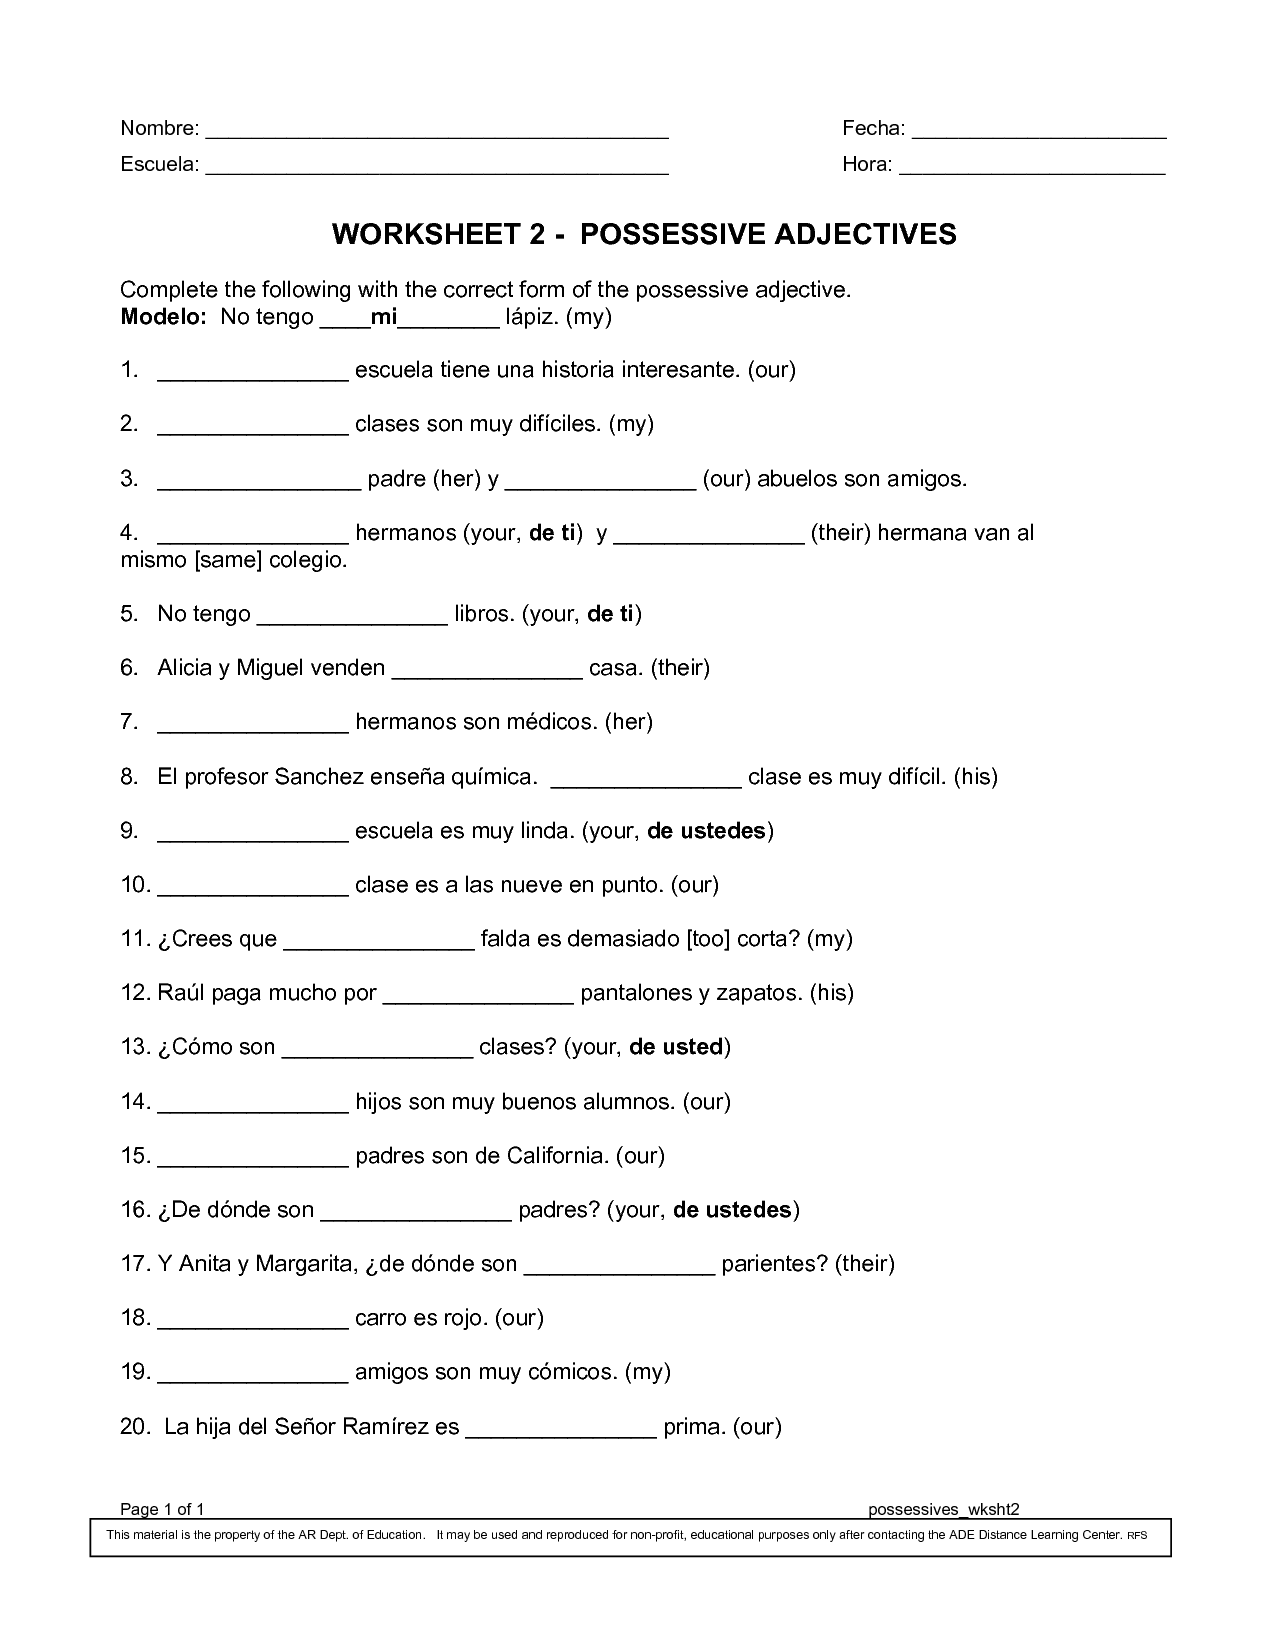 possessive-adjectives-and-pronouns-1-2-possessive-adjectives-possessives-adjectives